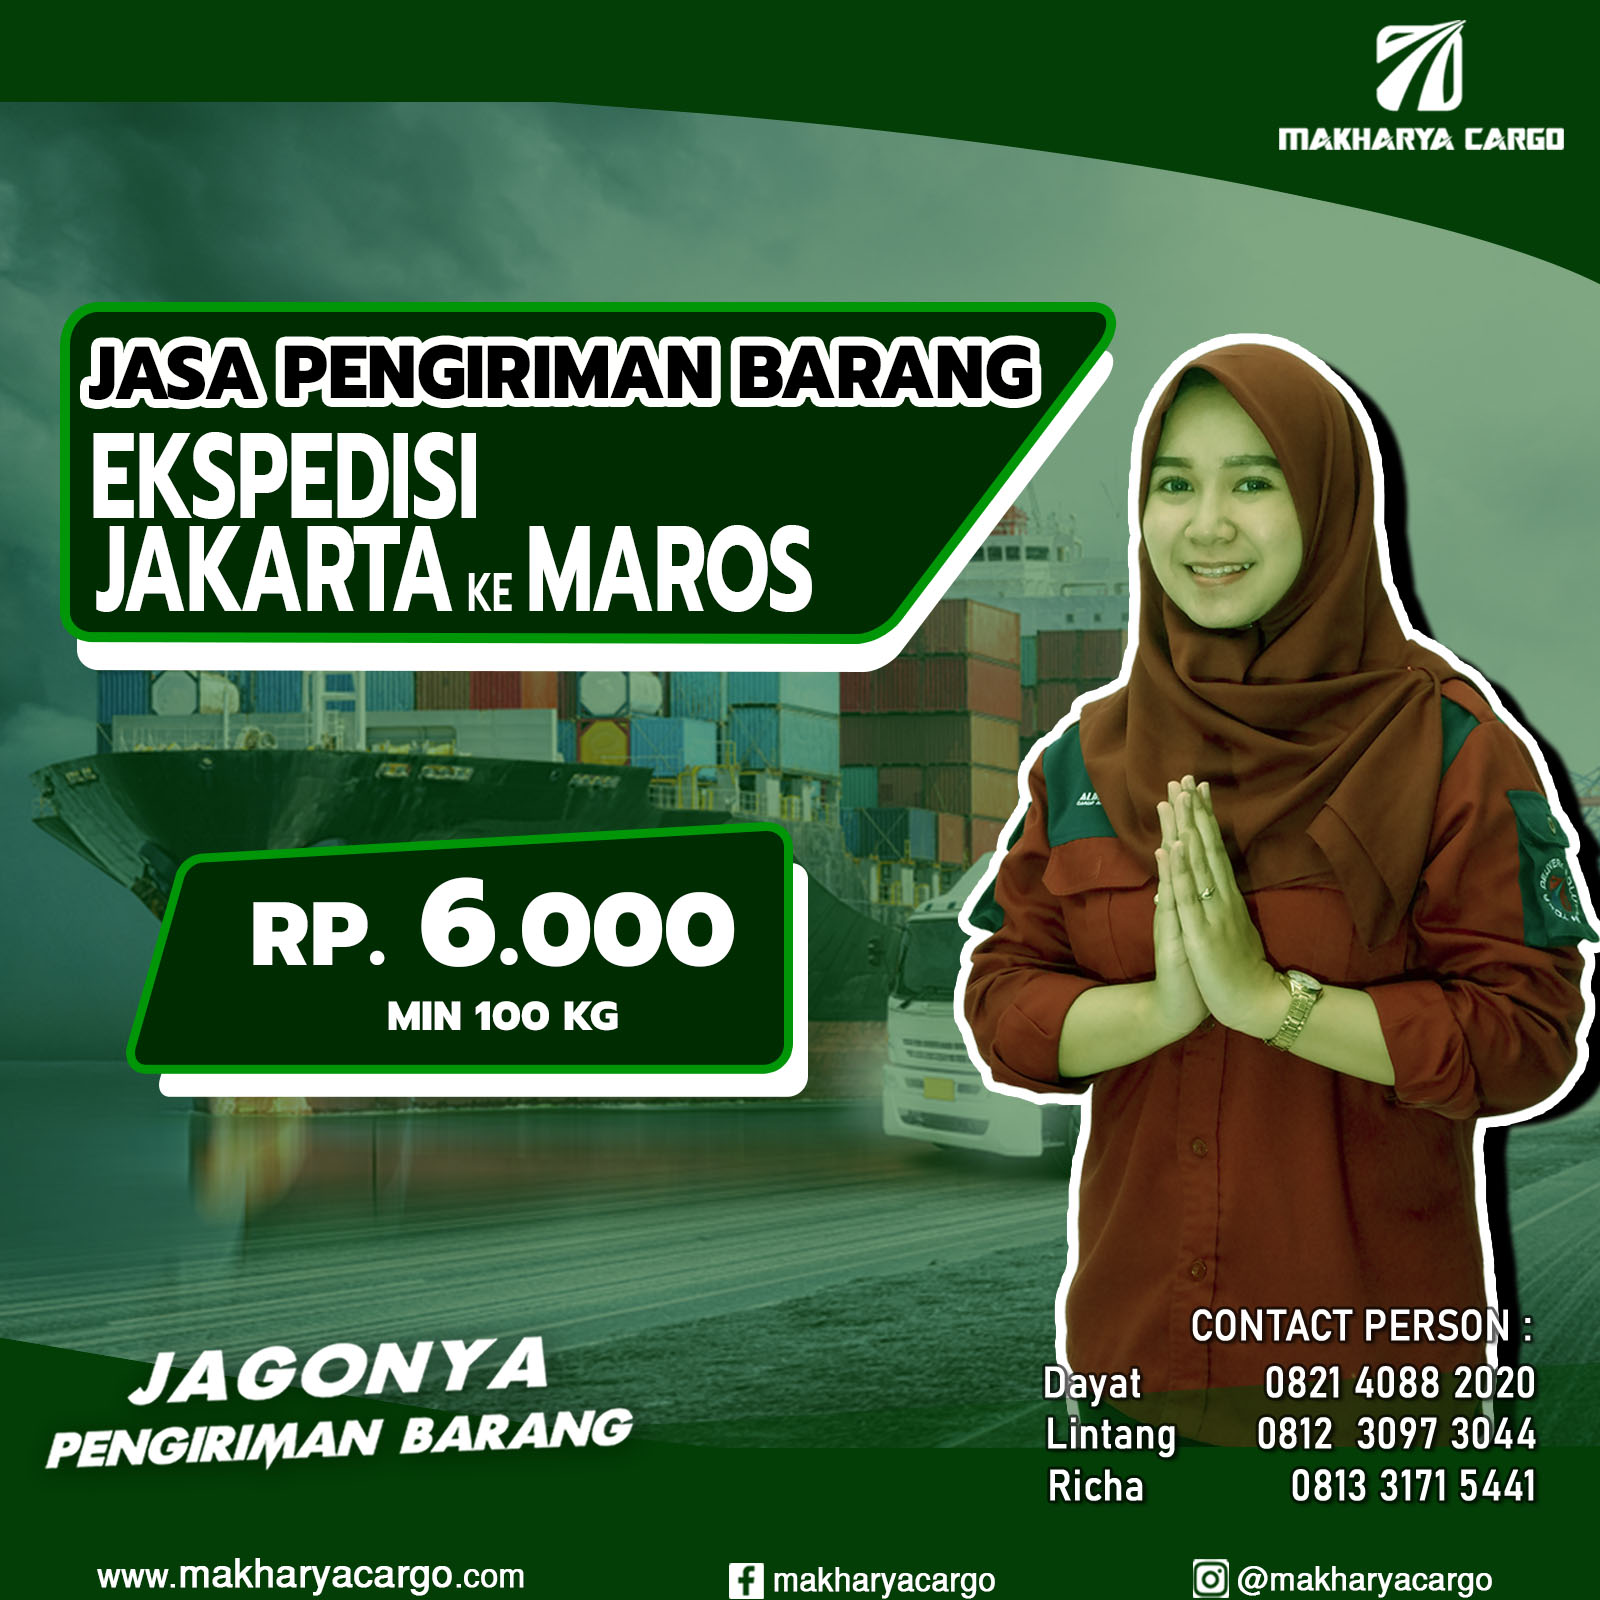 Ekspedisi Jakarta Maros